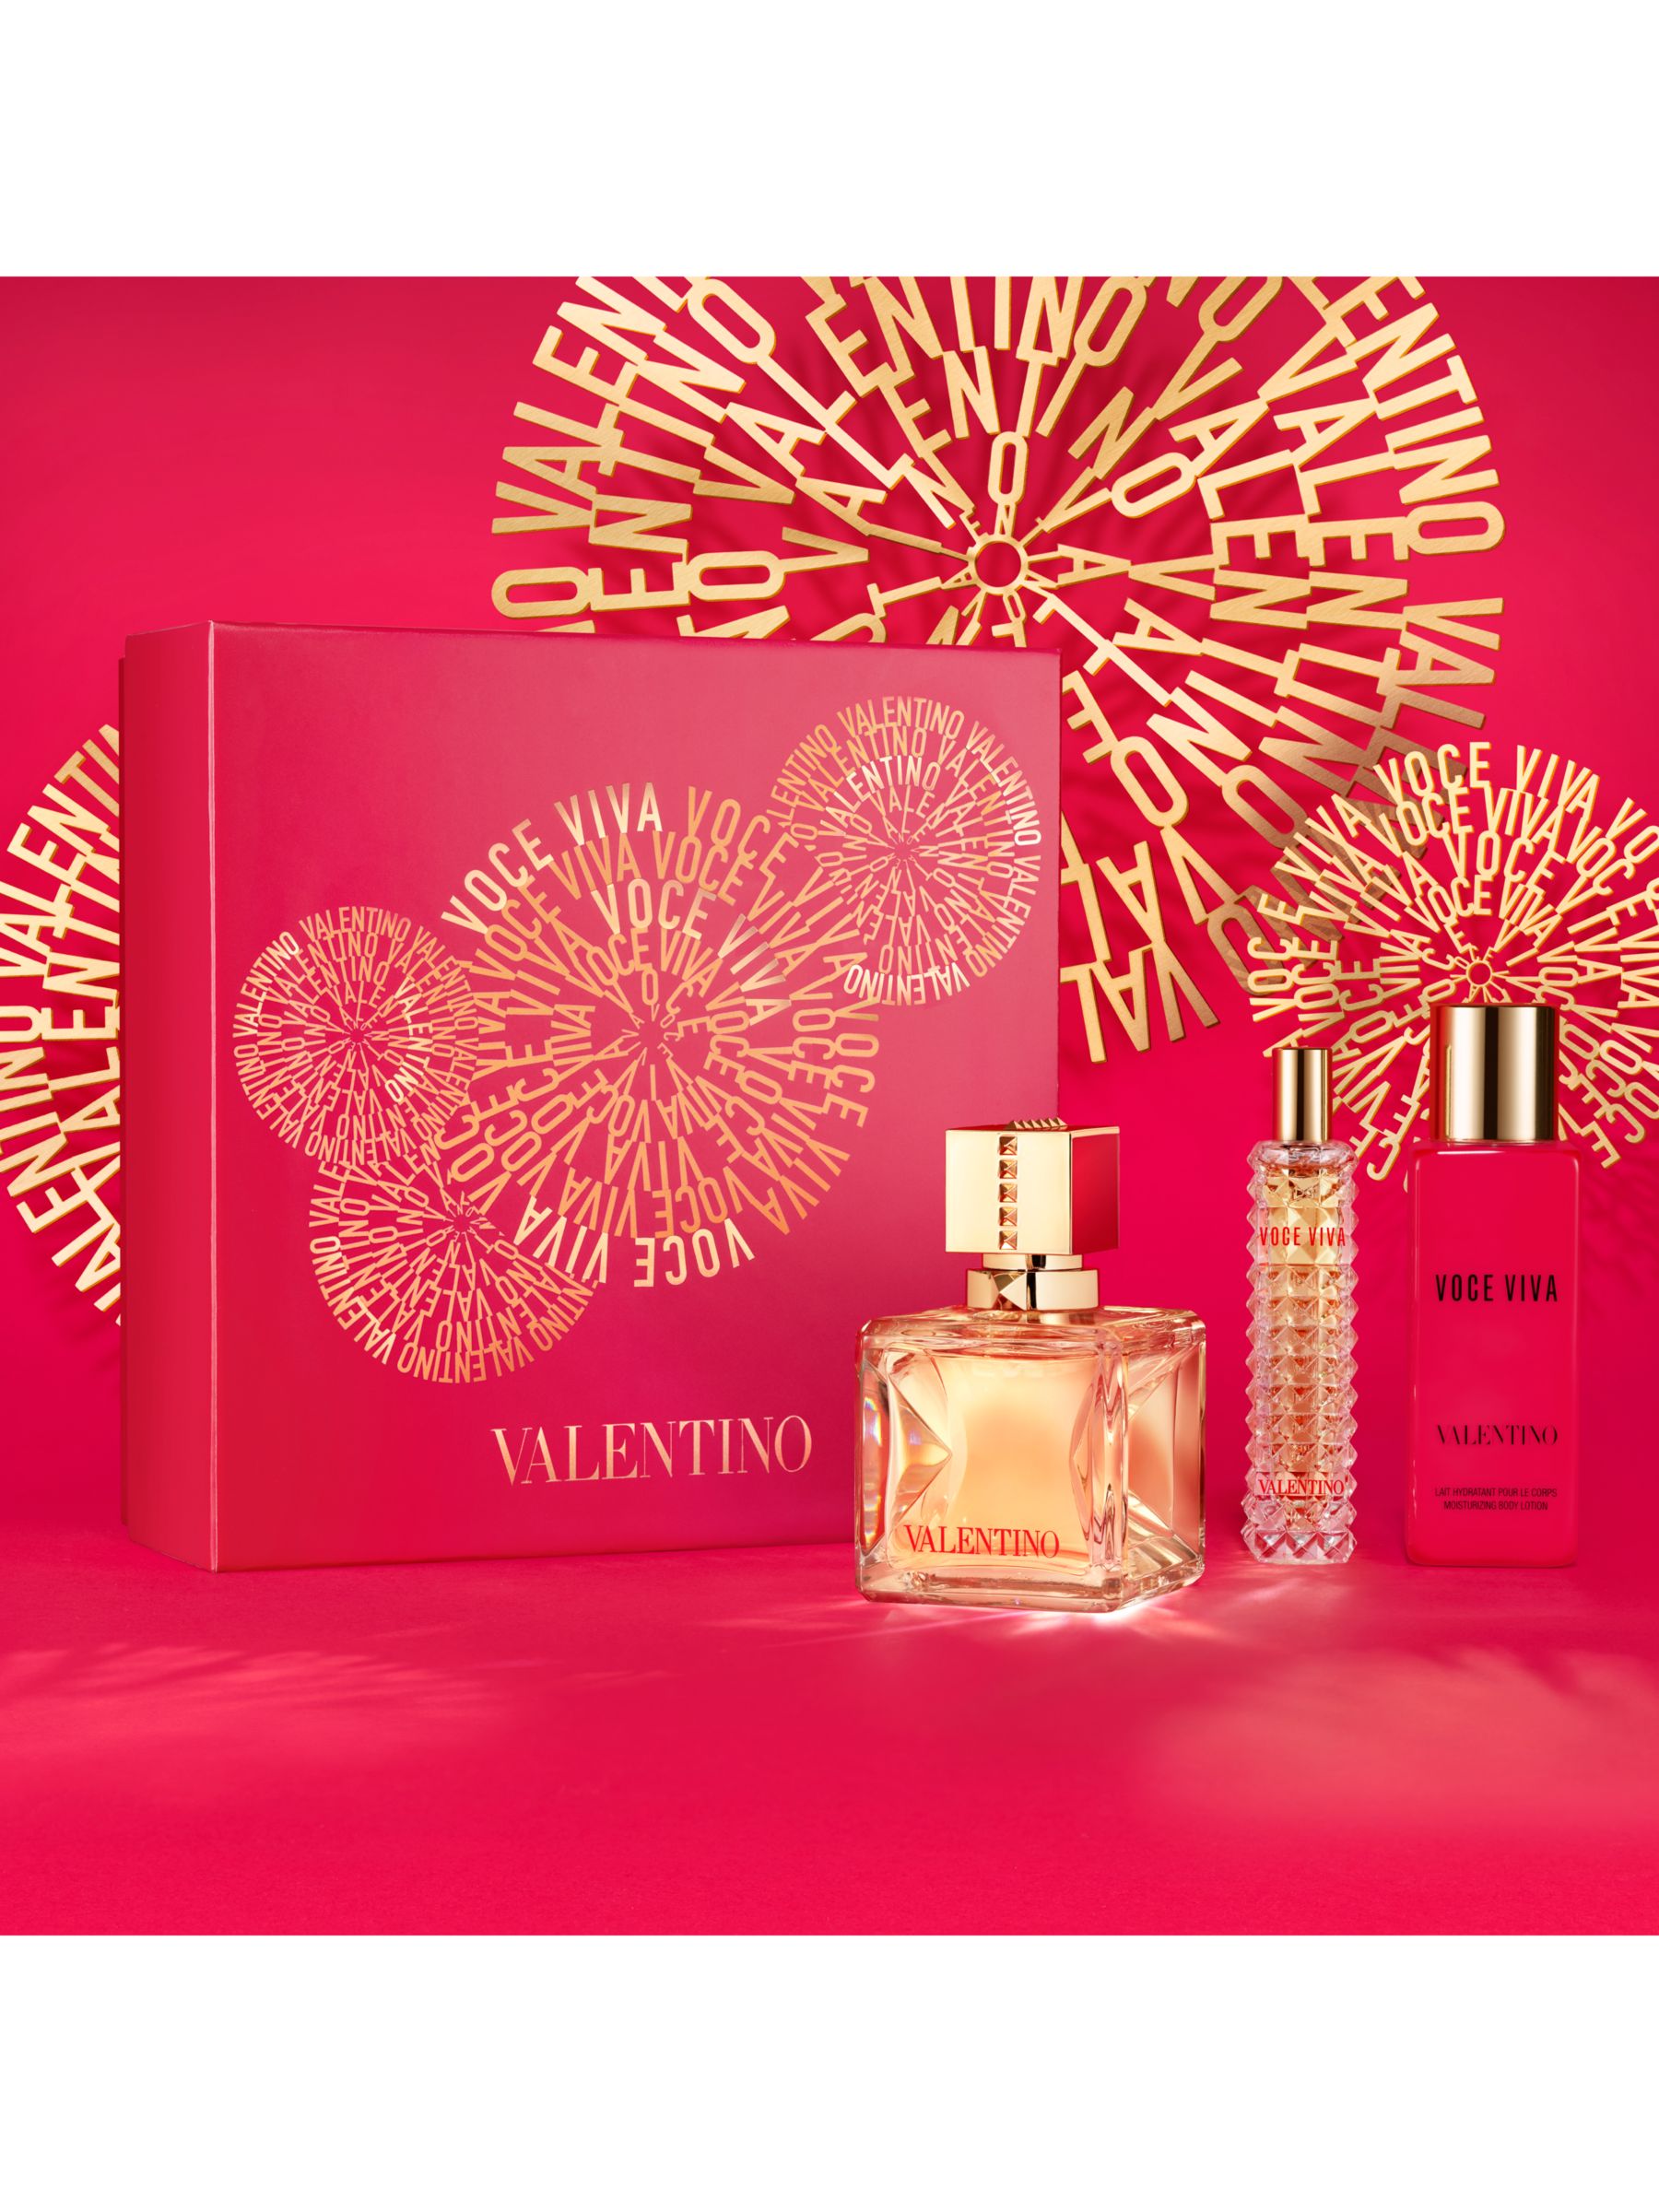 Valentino Voce Viva Eau de Parfum 100ml Fragrance Gift Set